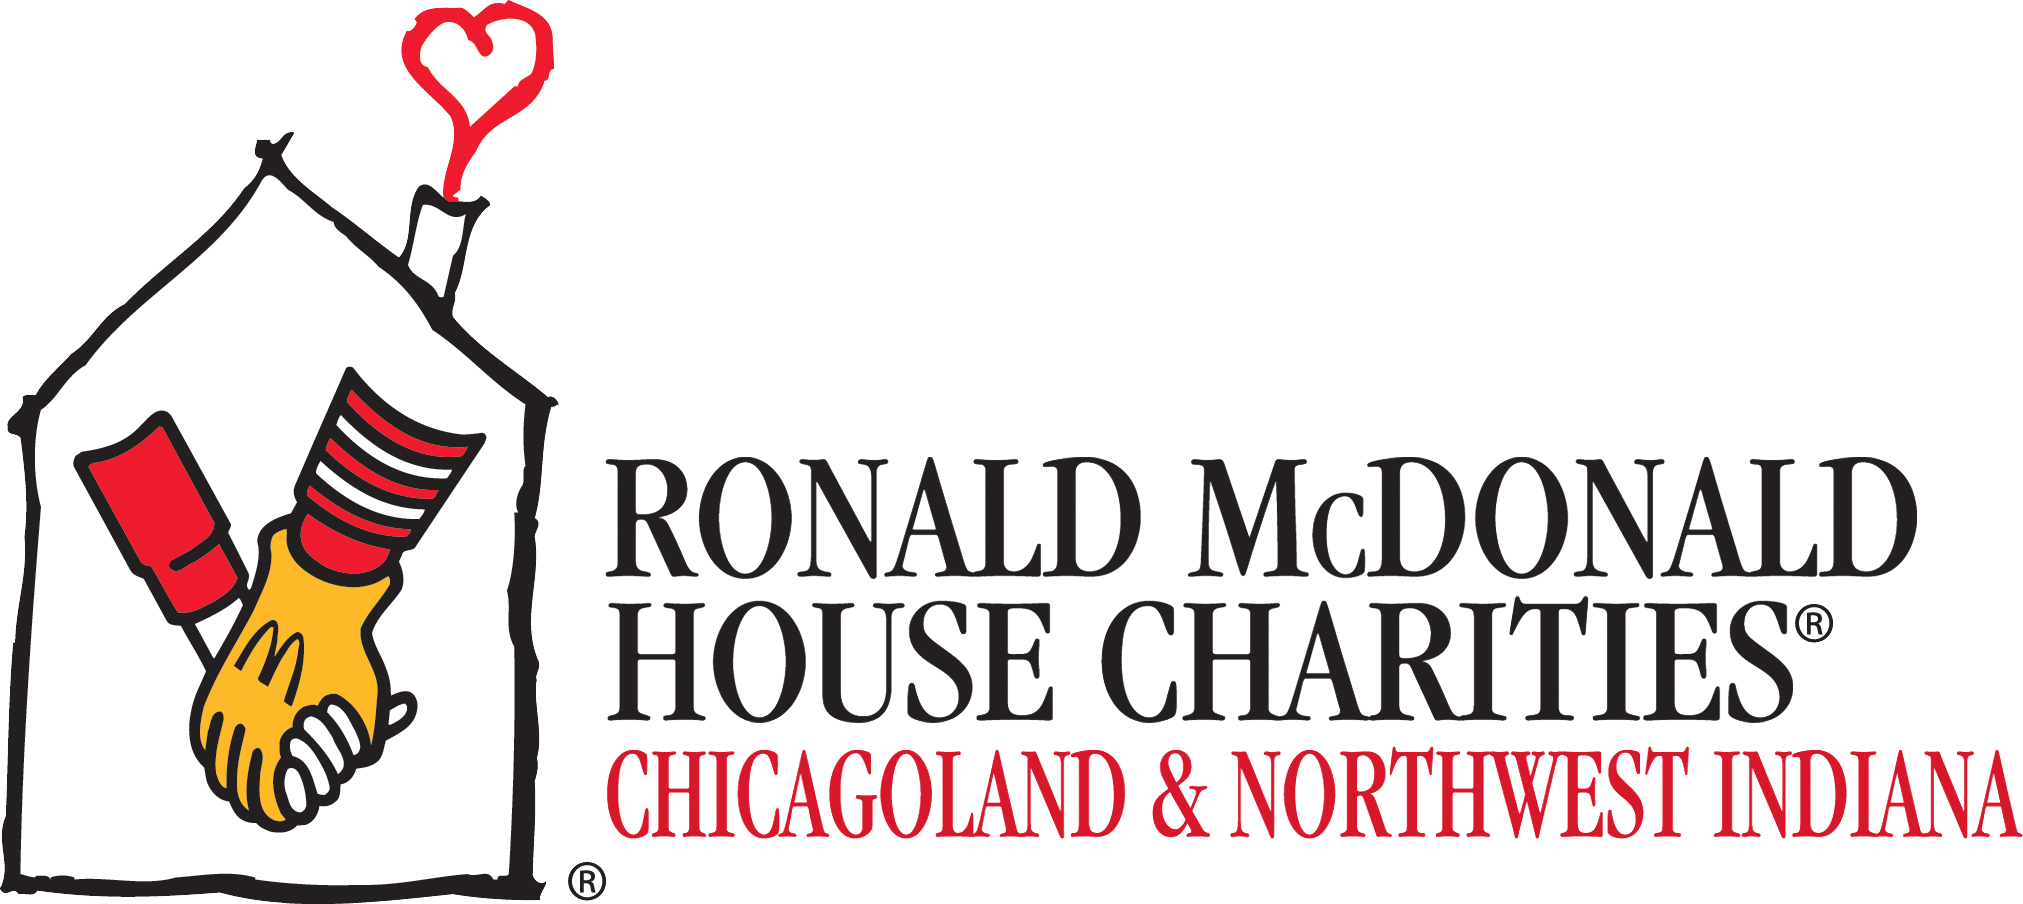 Ronald McDonald House Charities Logo.png